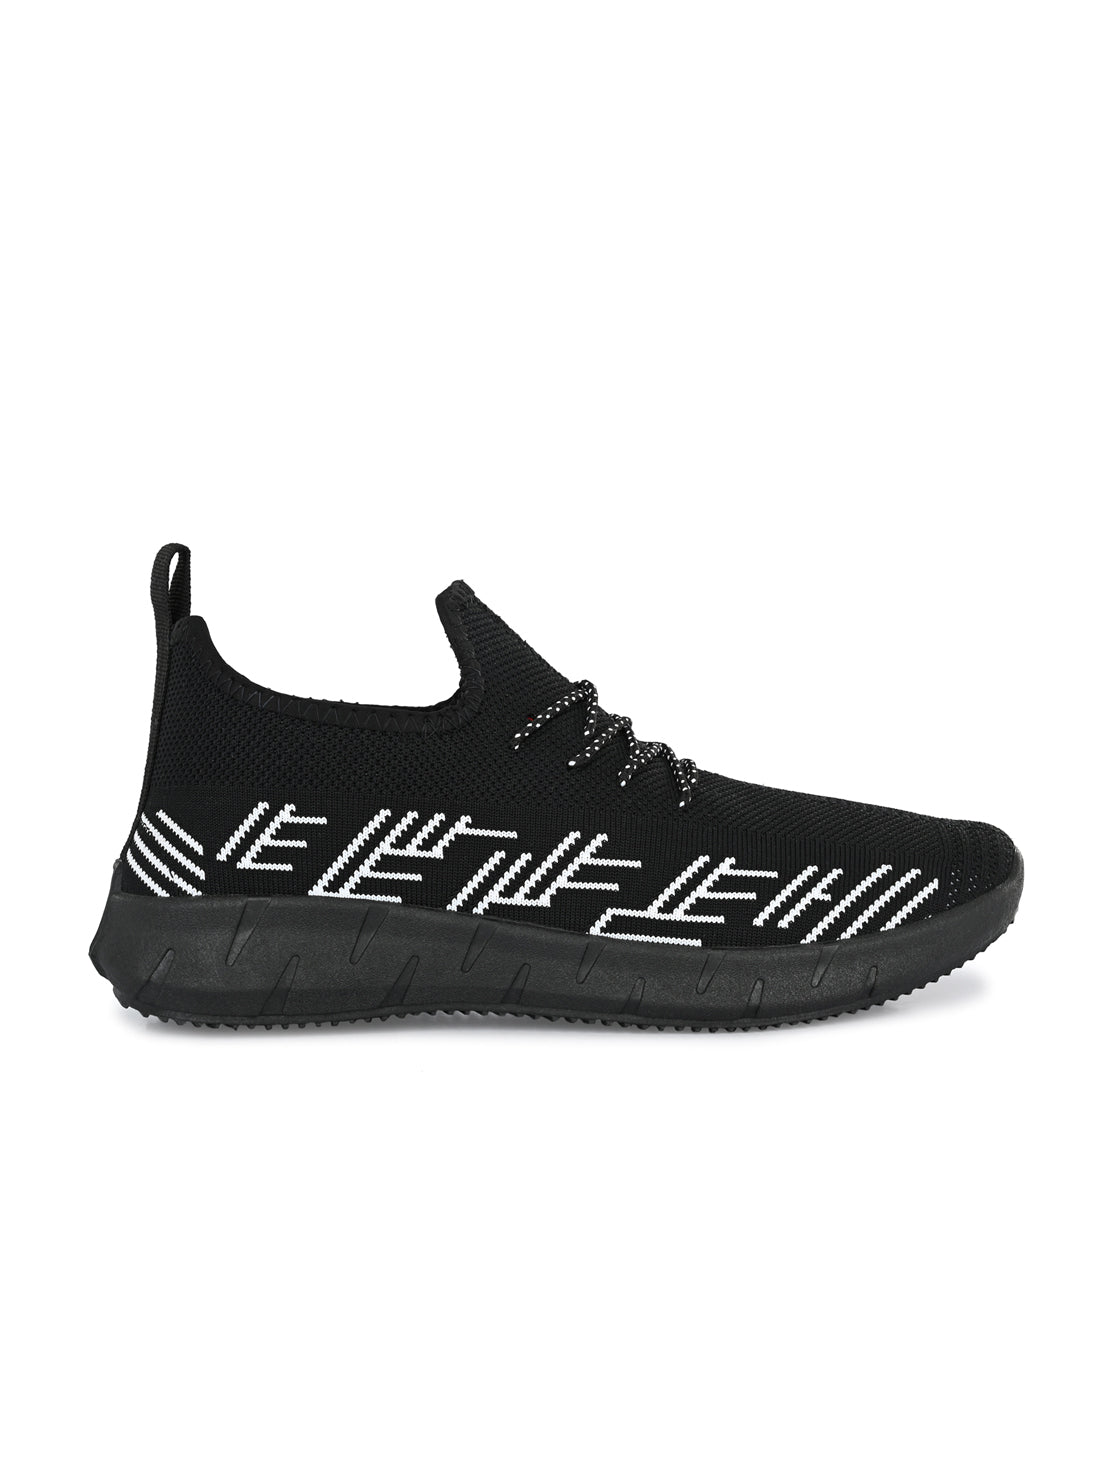 Hirolas® Men's Black Knitted Running/Walking/Gym Lace Up Sneaker Sport Shoes (HRL2049BLK)